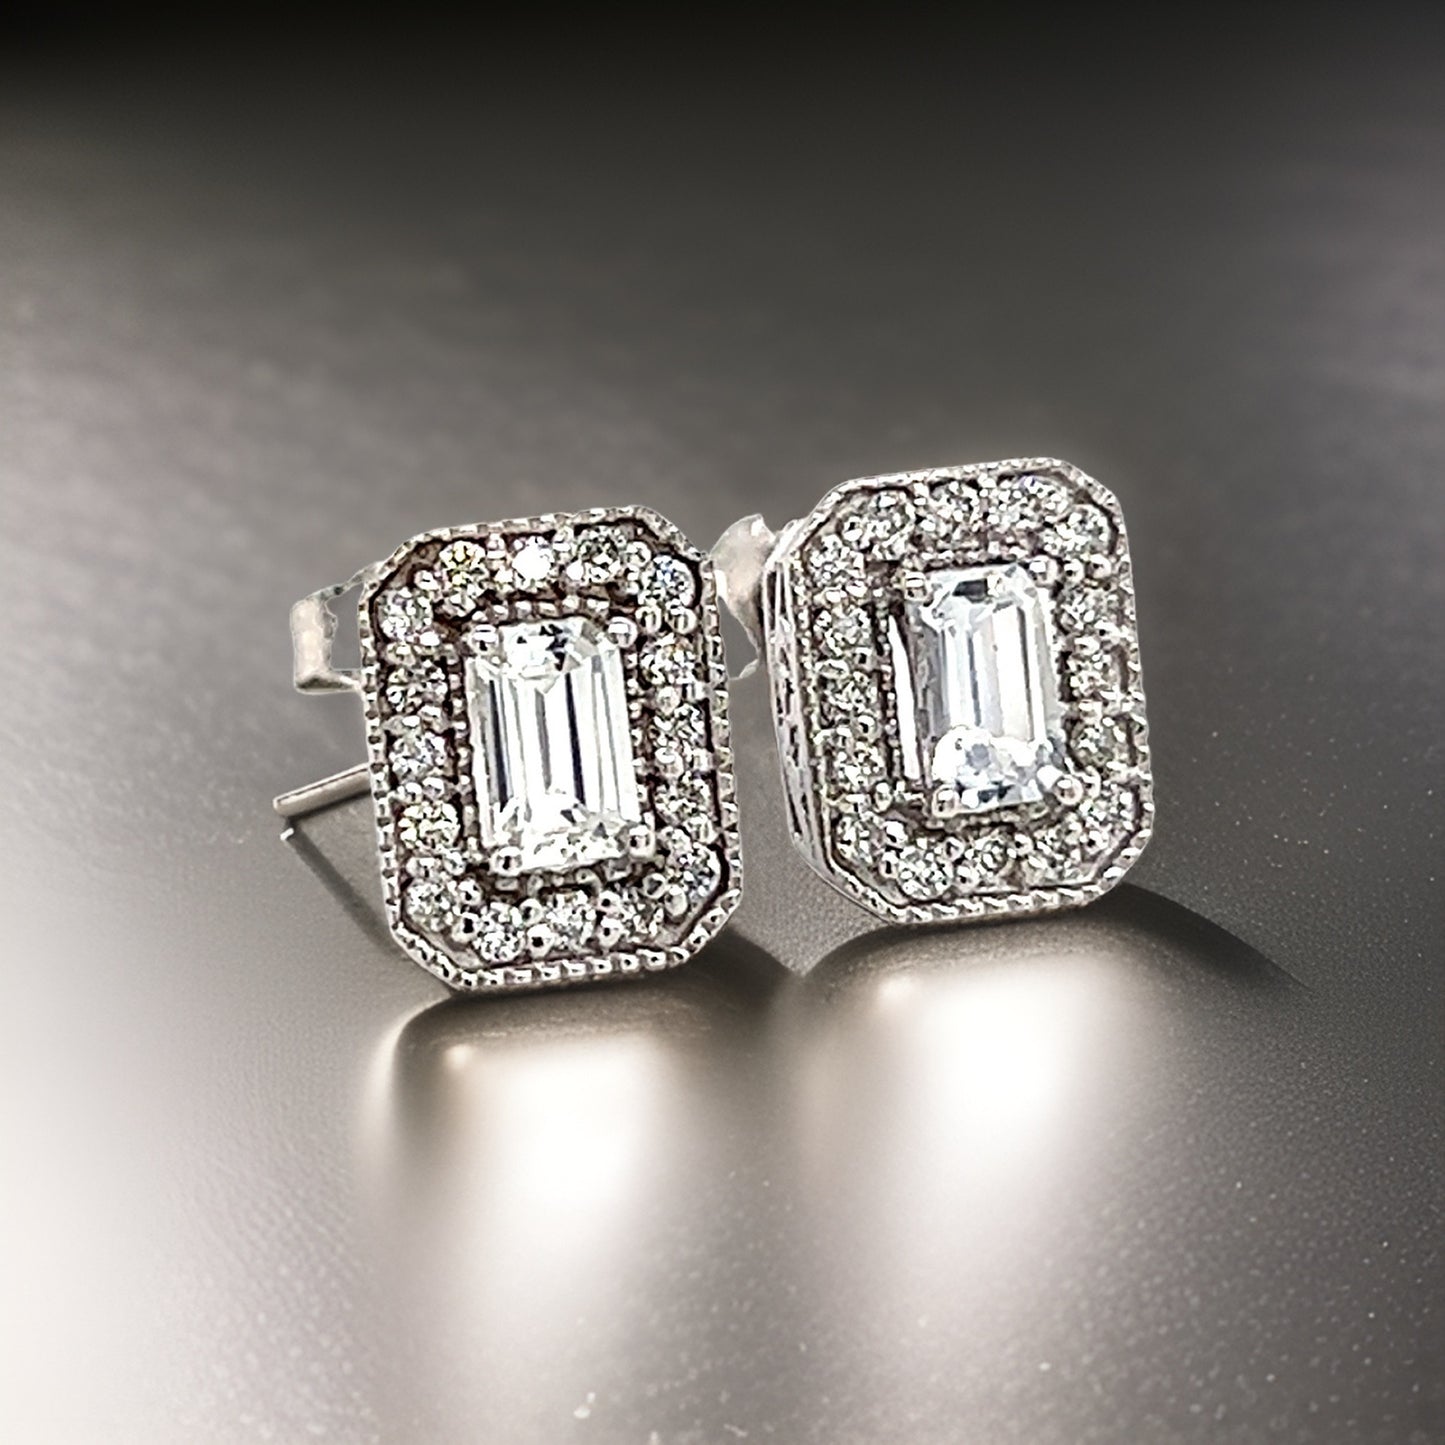 Natural Sapphire Diamond Stud Earrings 14k W Gold 0.96 TCW Certified $2950 121268